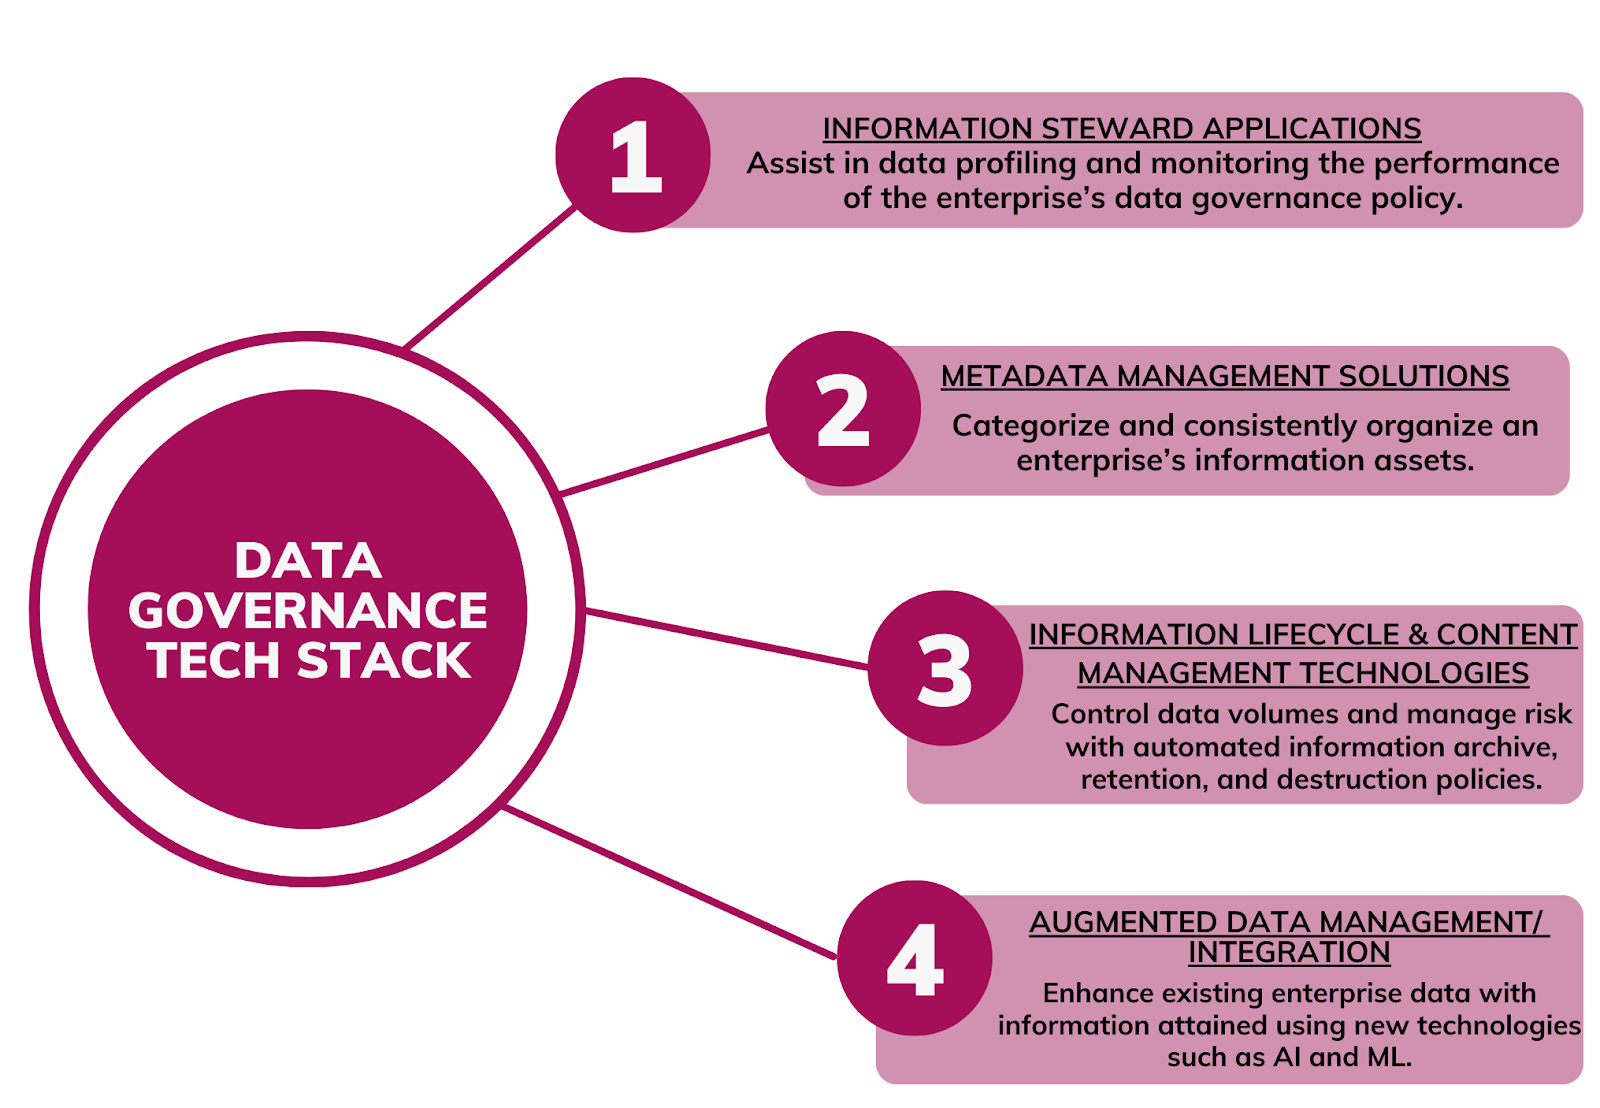 Data governance tech stack